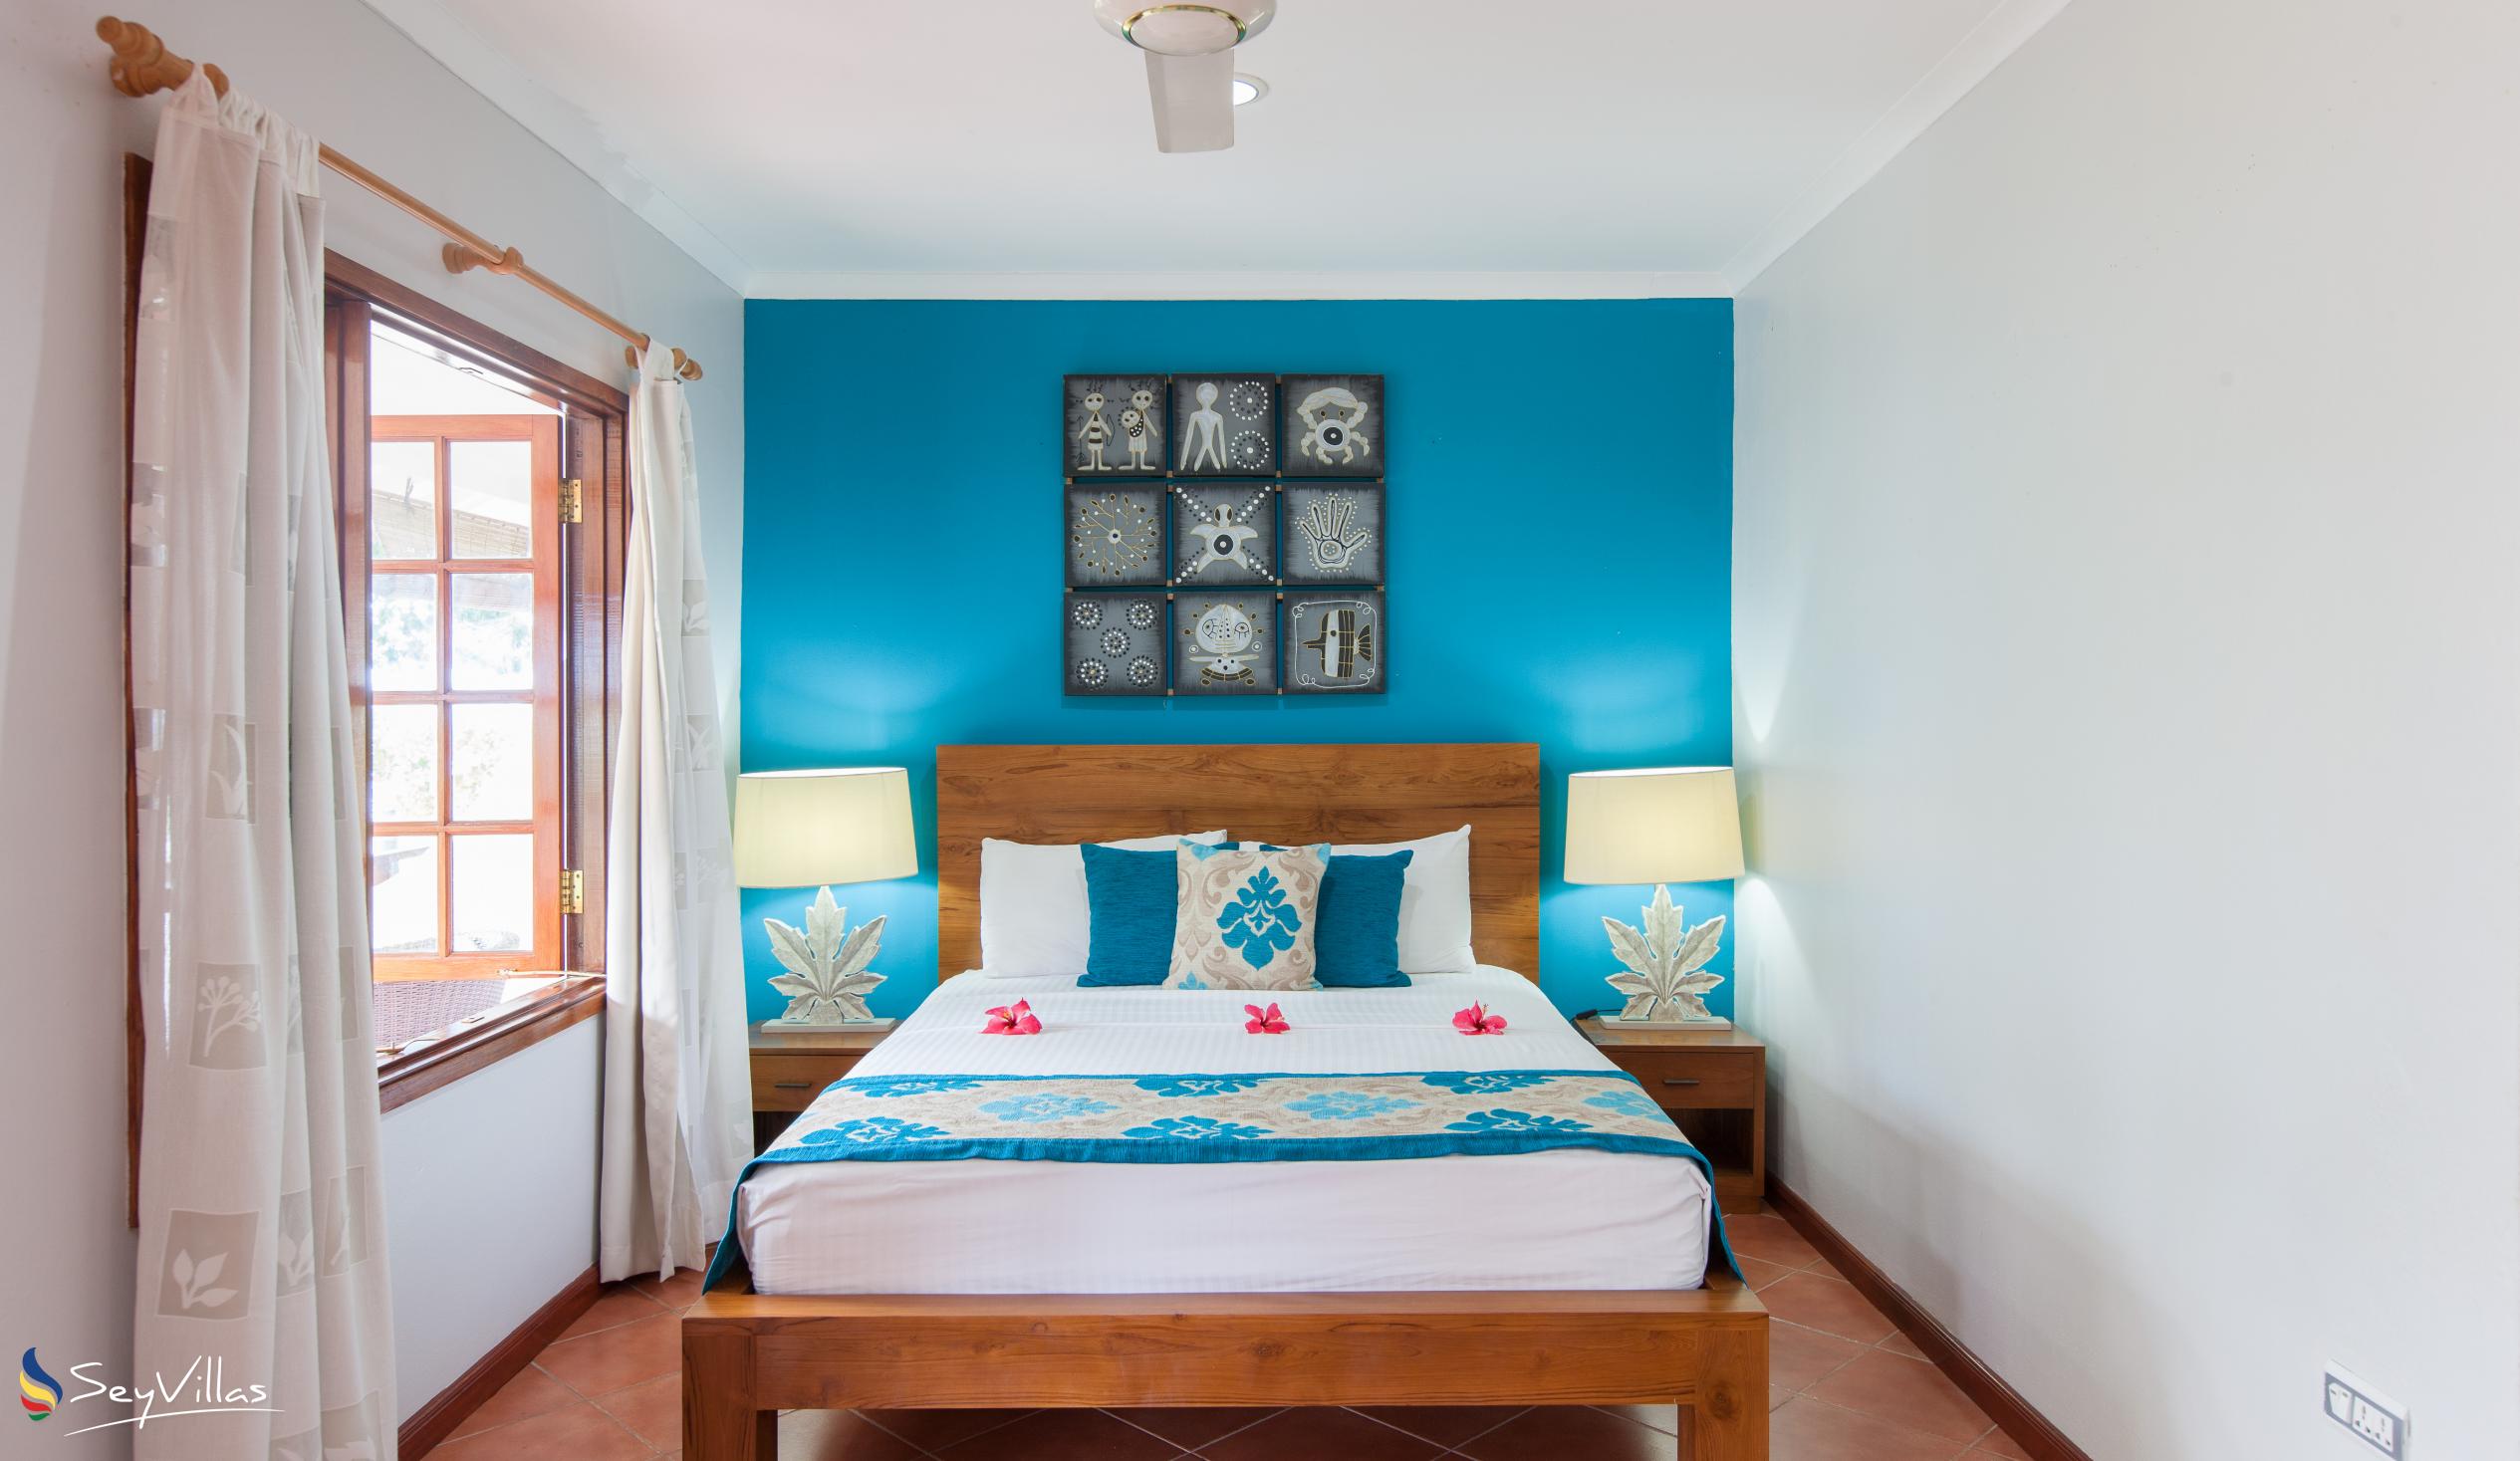 Photo 34: Villas de Mer - Superior Room - Praslin (Seychelles)